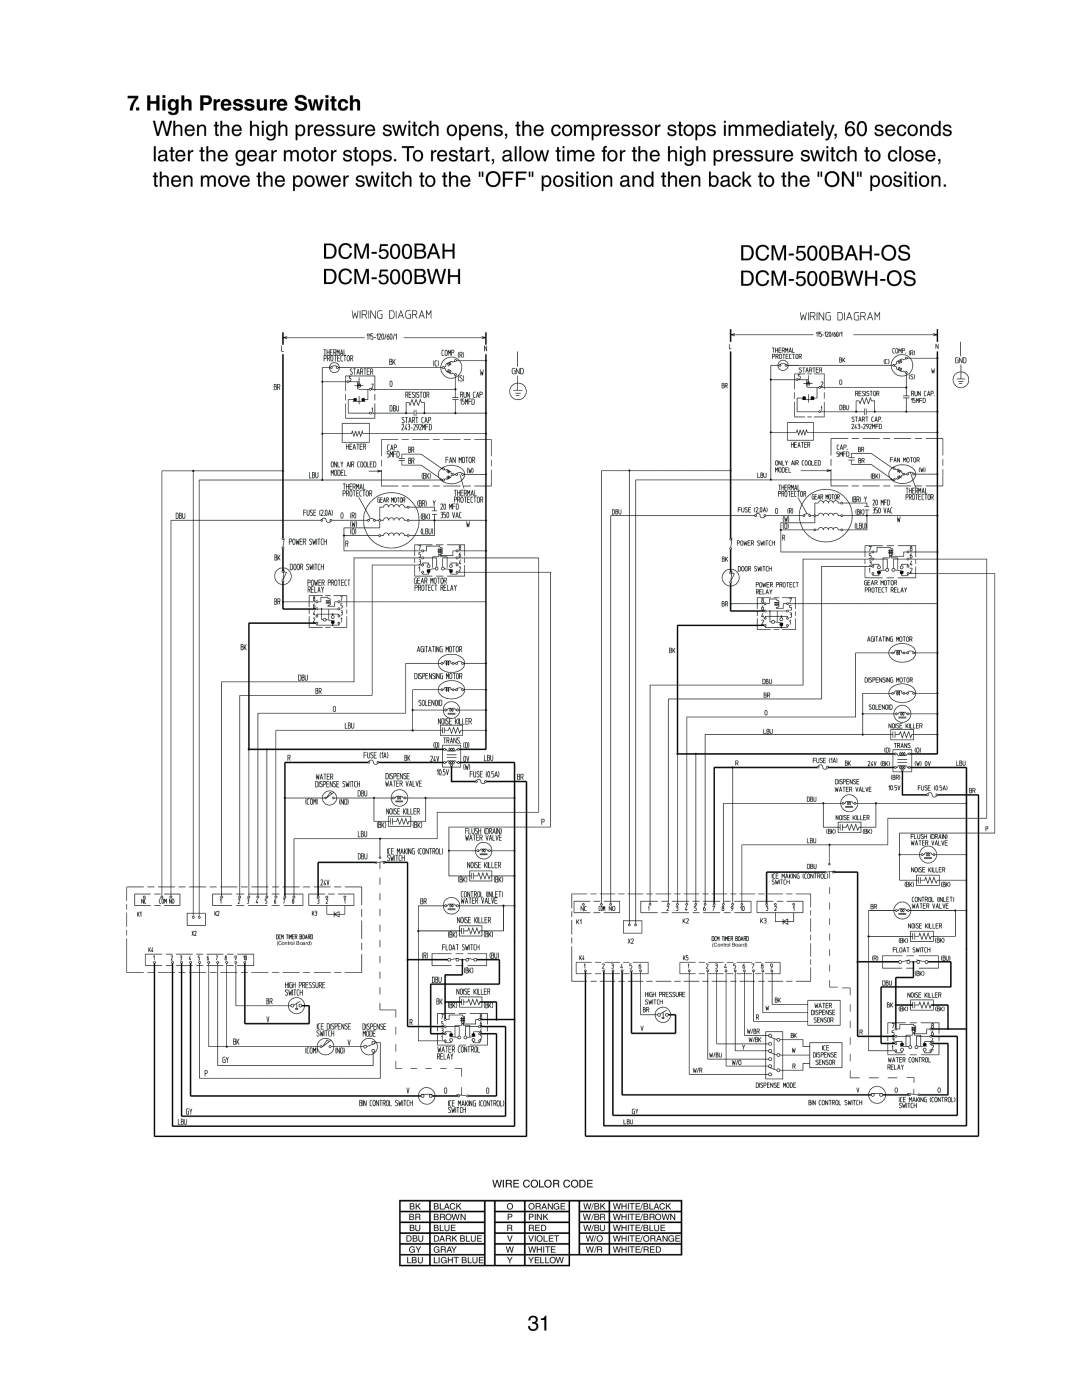 Hoshizaki DCM-500BAH-OS, DCM-500BWH-OS service manual High Pressure Switch 